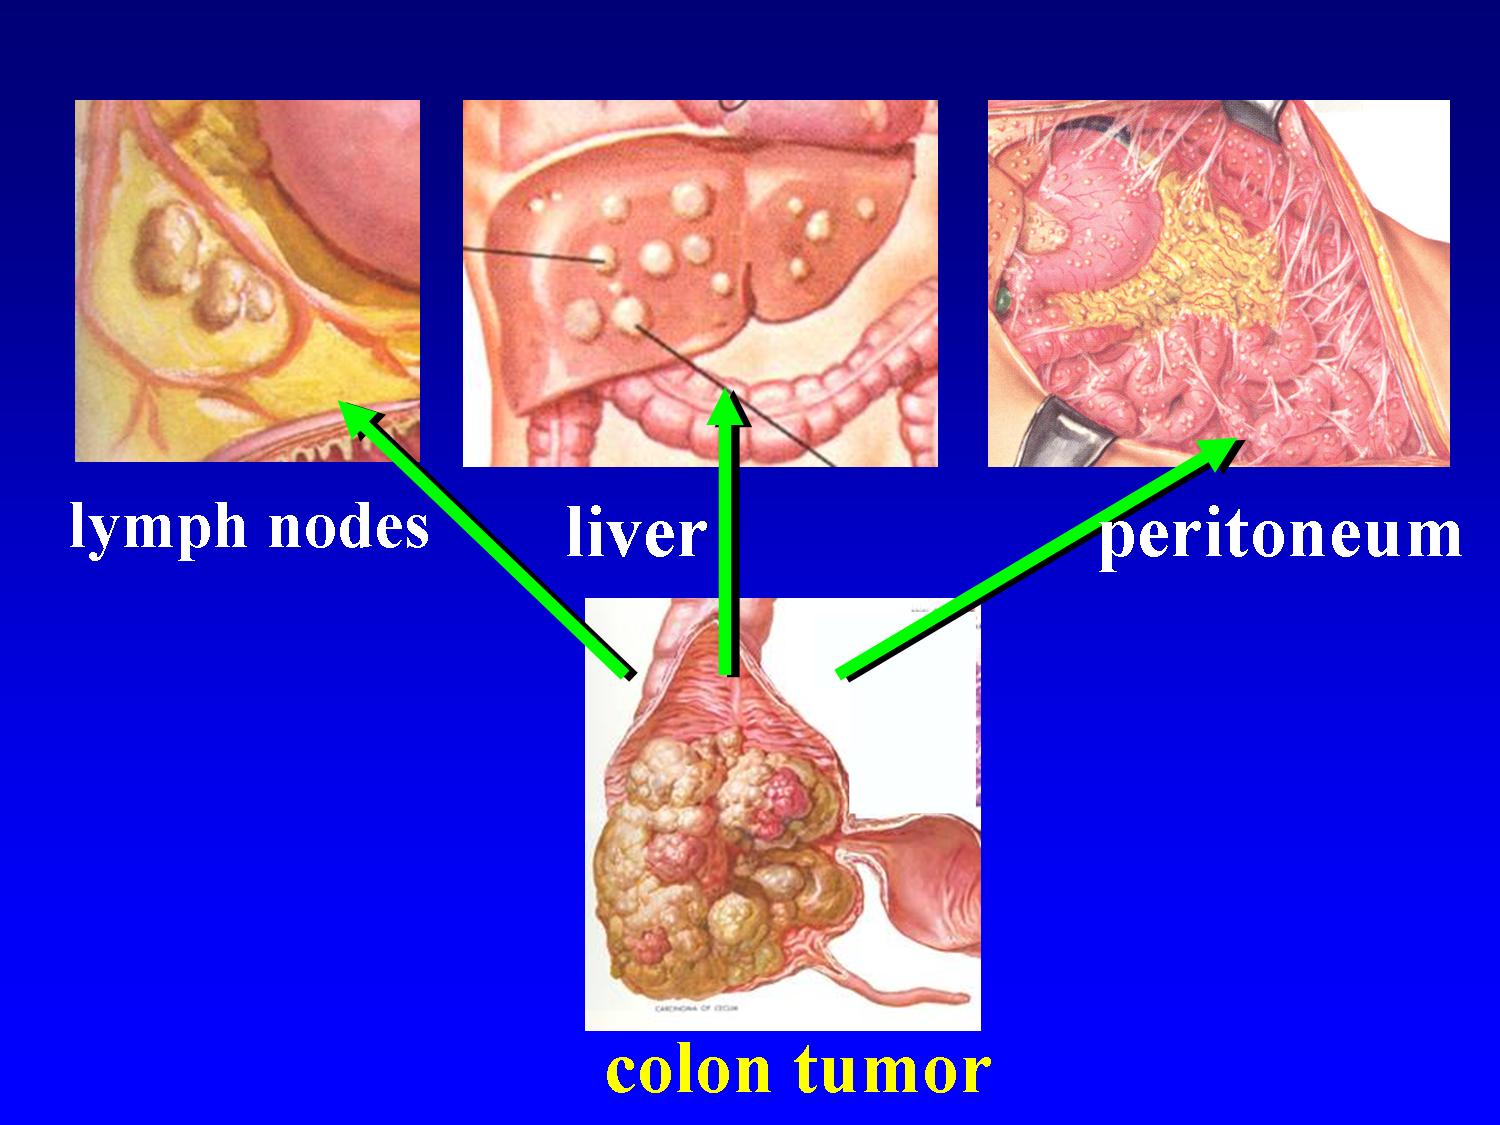 hipec-ovhipec-pmp-peritoneal-cancer-peritoneum-seeding-seedings